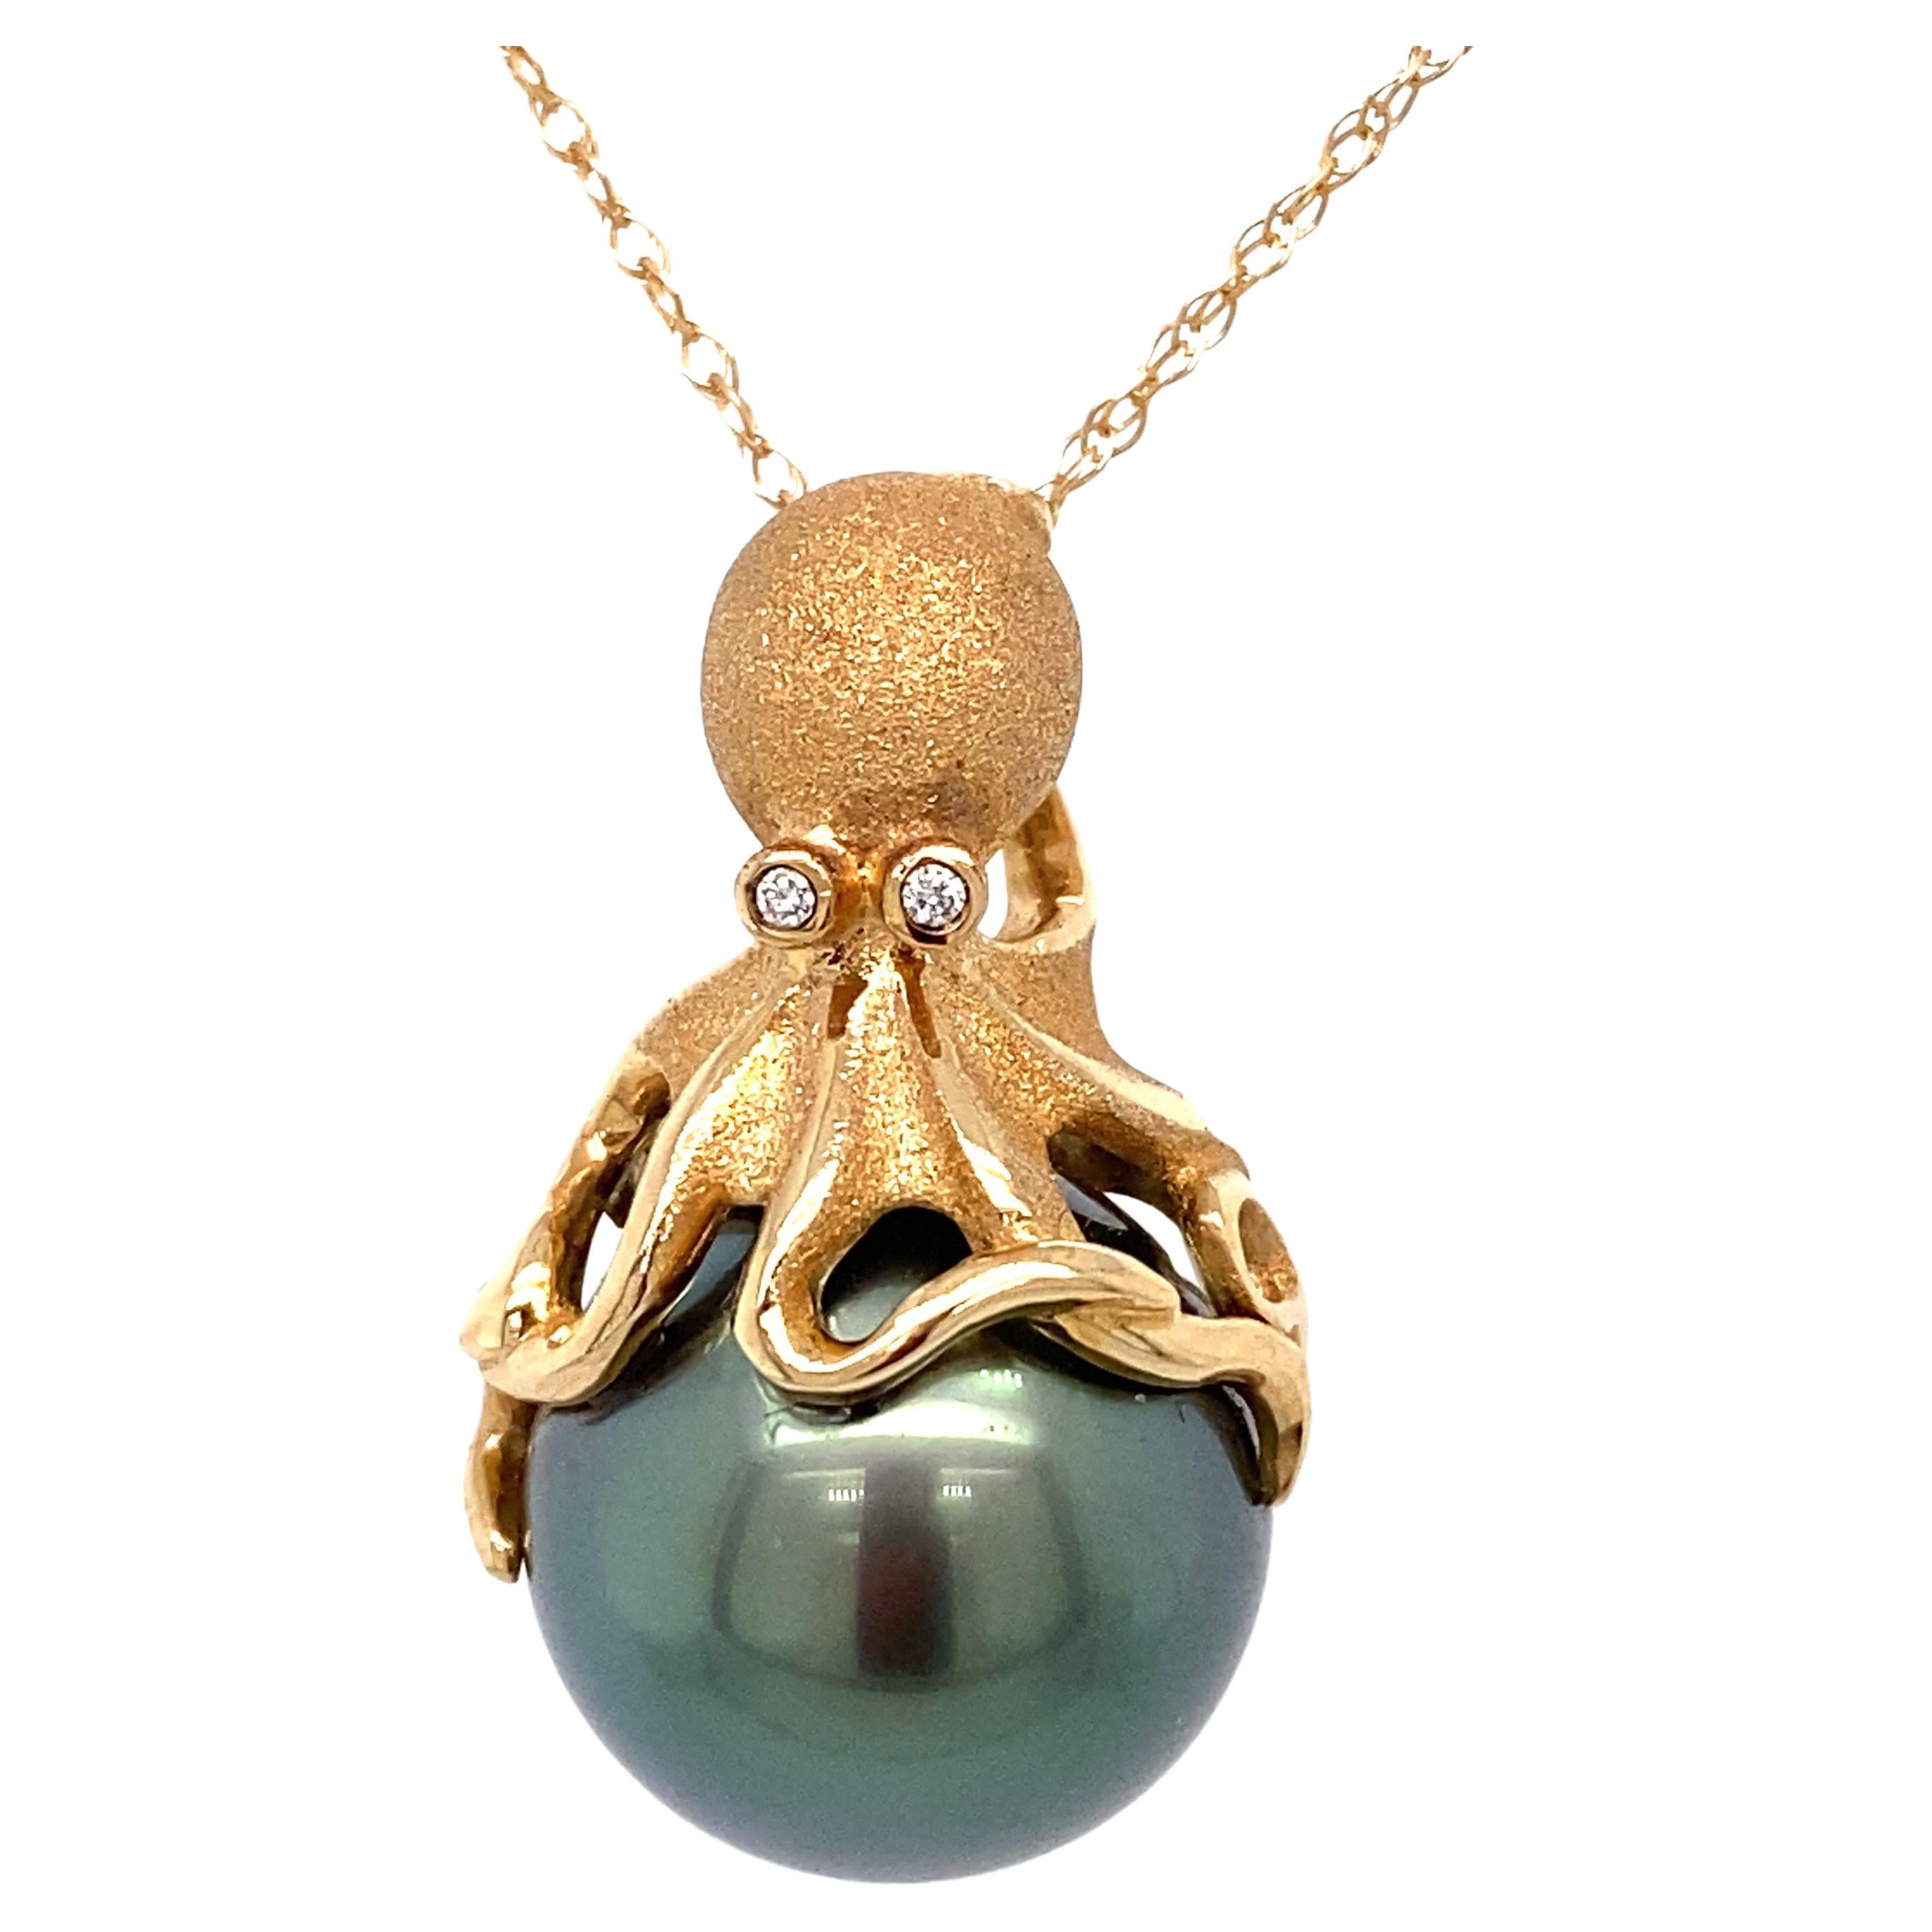 Circa 1980s Tahitian Pearl and Diamond Octopus Pendant in 14K Gold